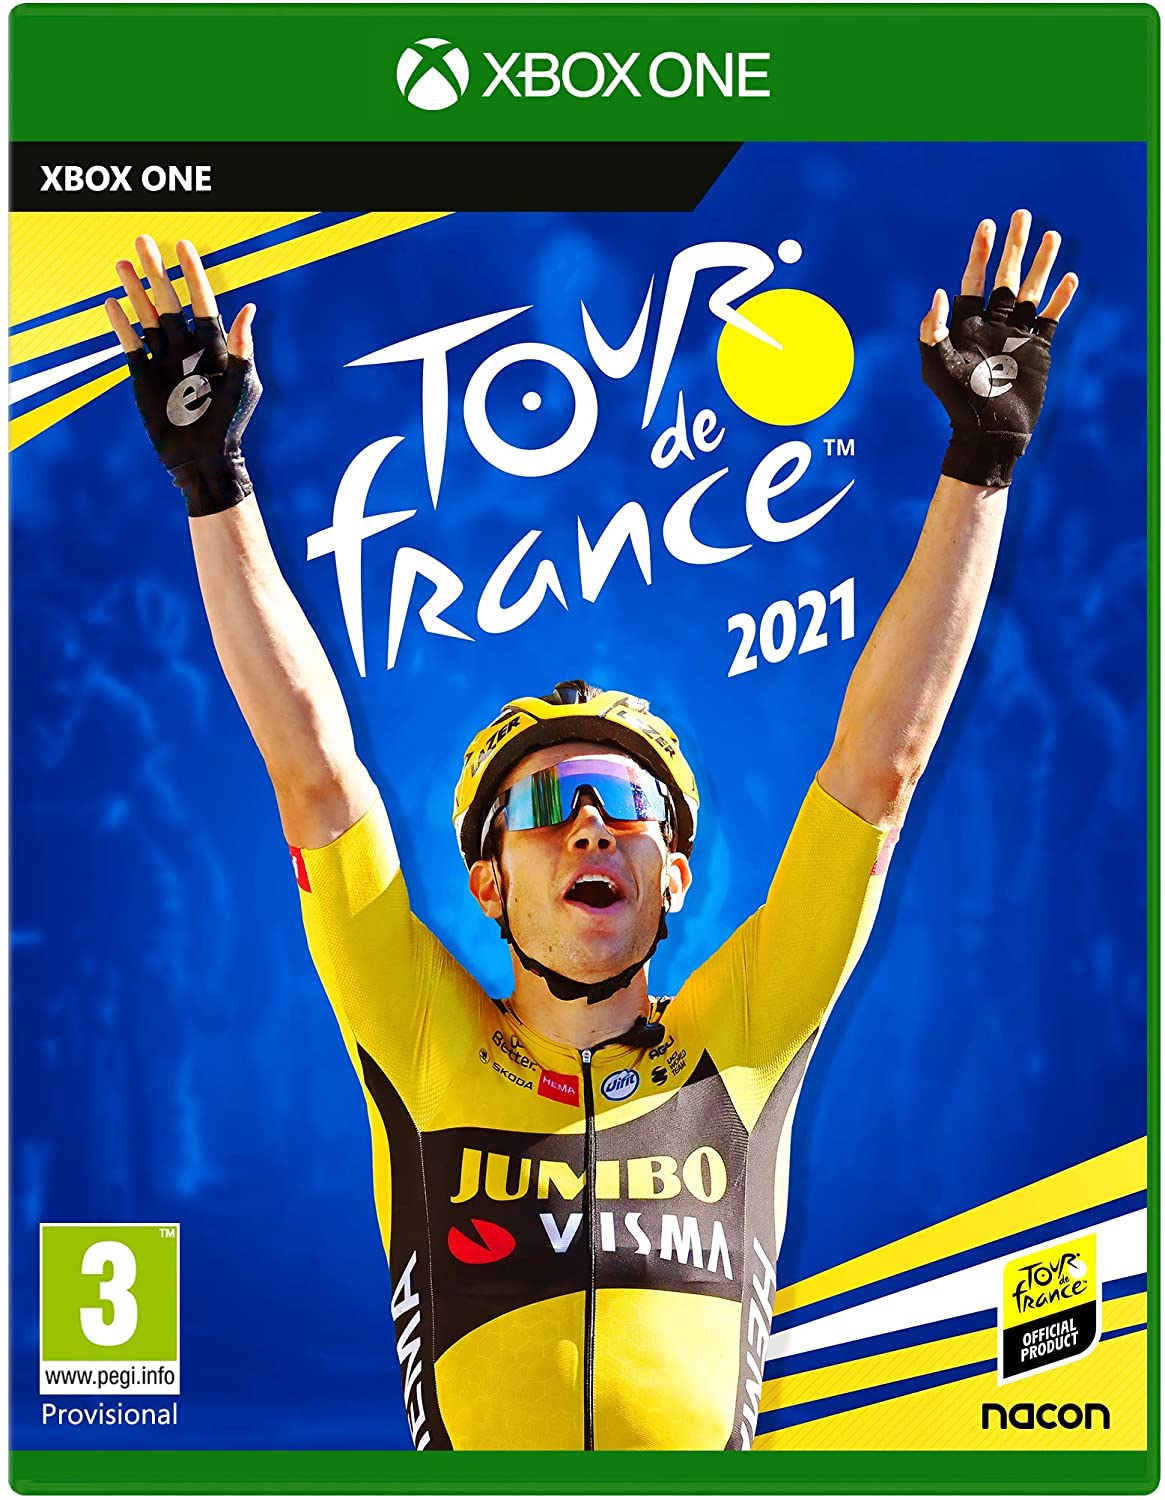 Tour de France 2021 Digital Download Key (Xbox One): VPN Activated Key - 